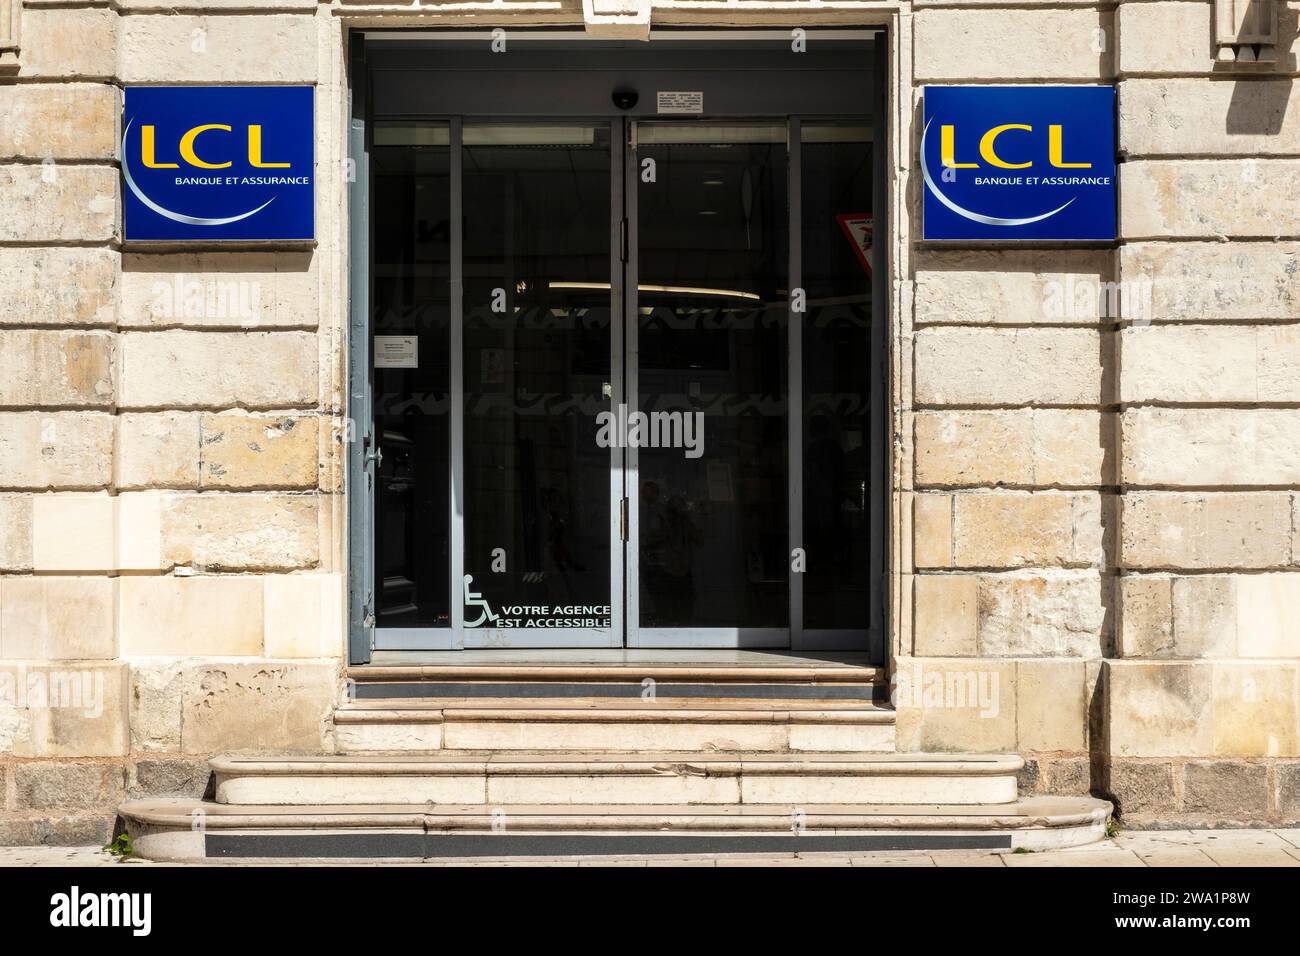 LCL bank and insurances building in Amiens | Batiment LCL banque et assurance a Amiens Stock Photo